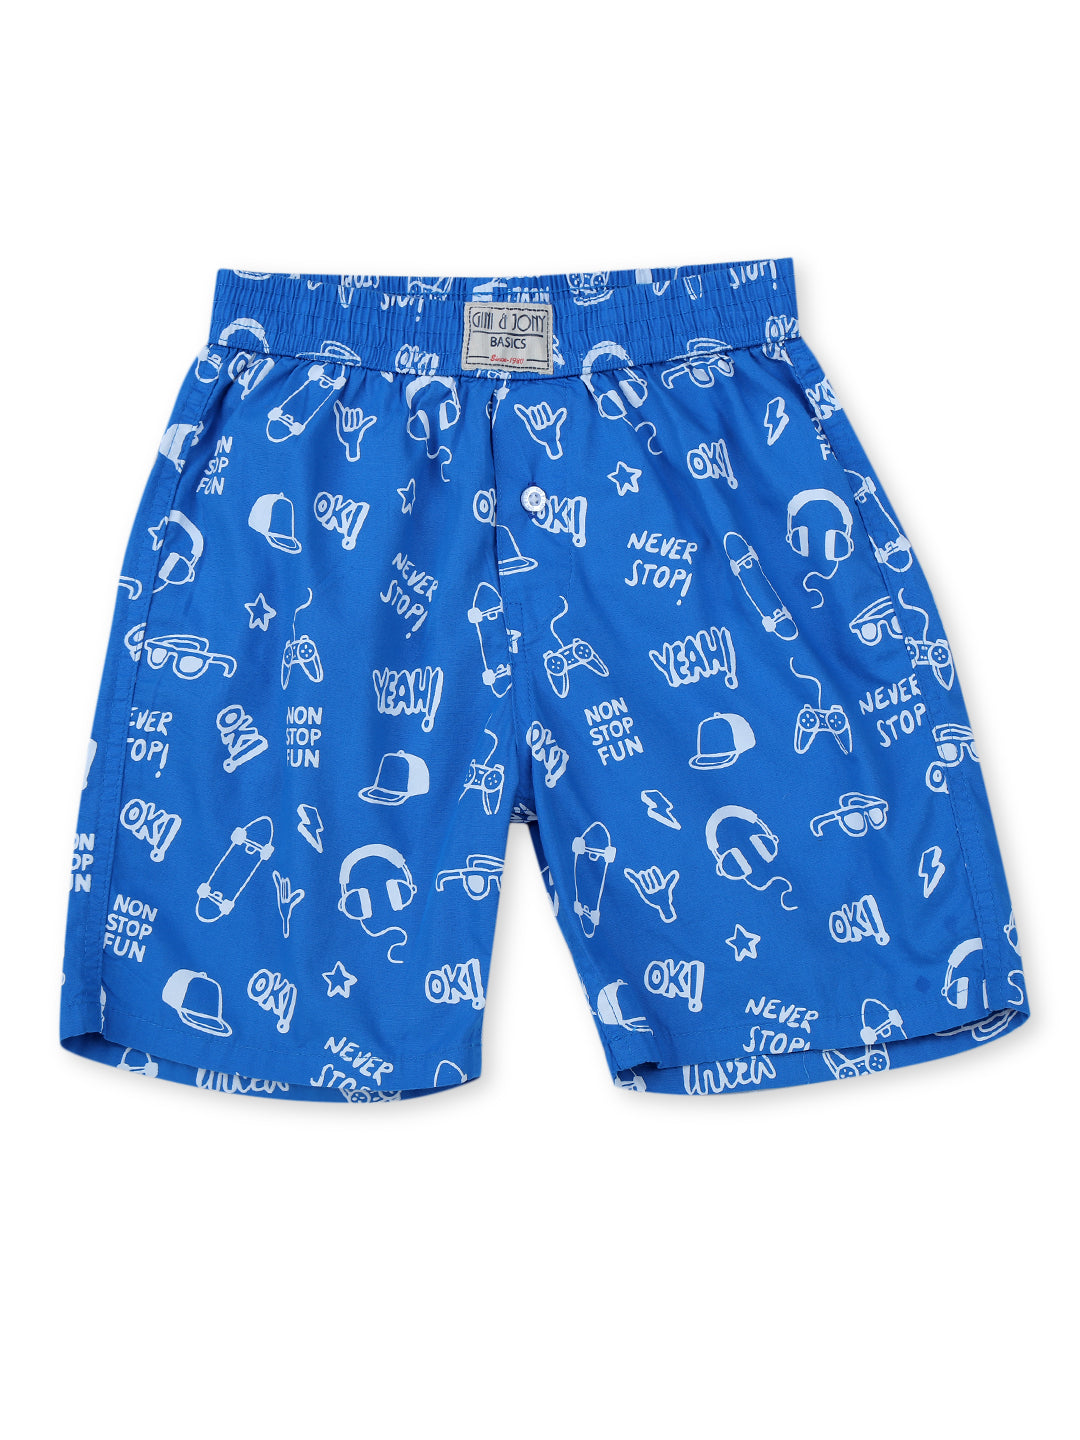 Boys Blue Cotton Printed Boxer Shorts